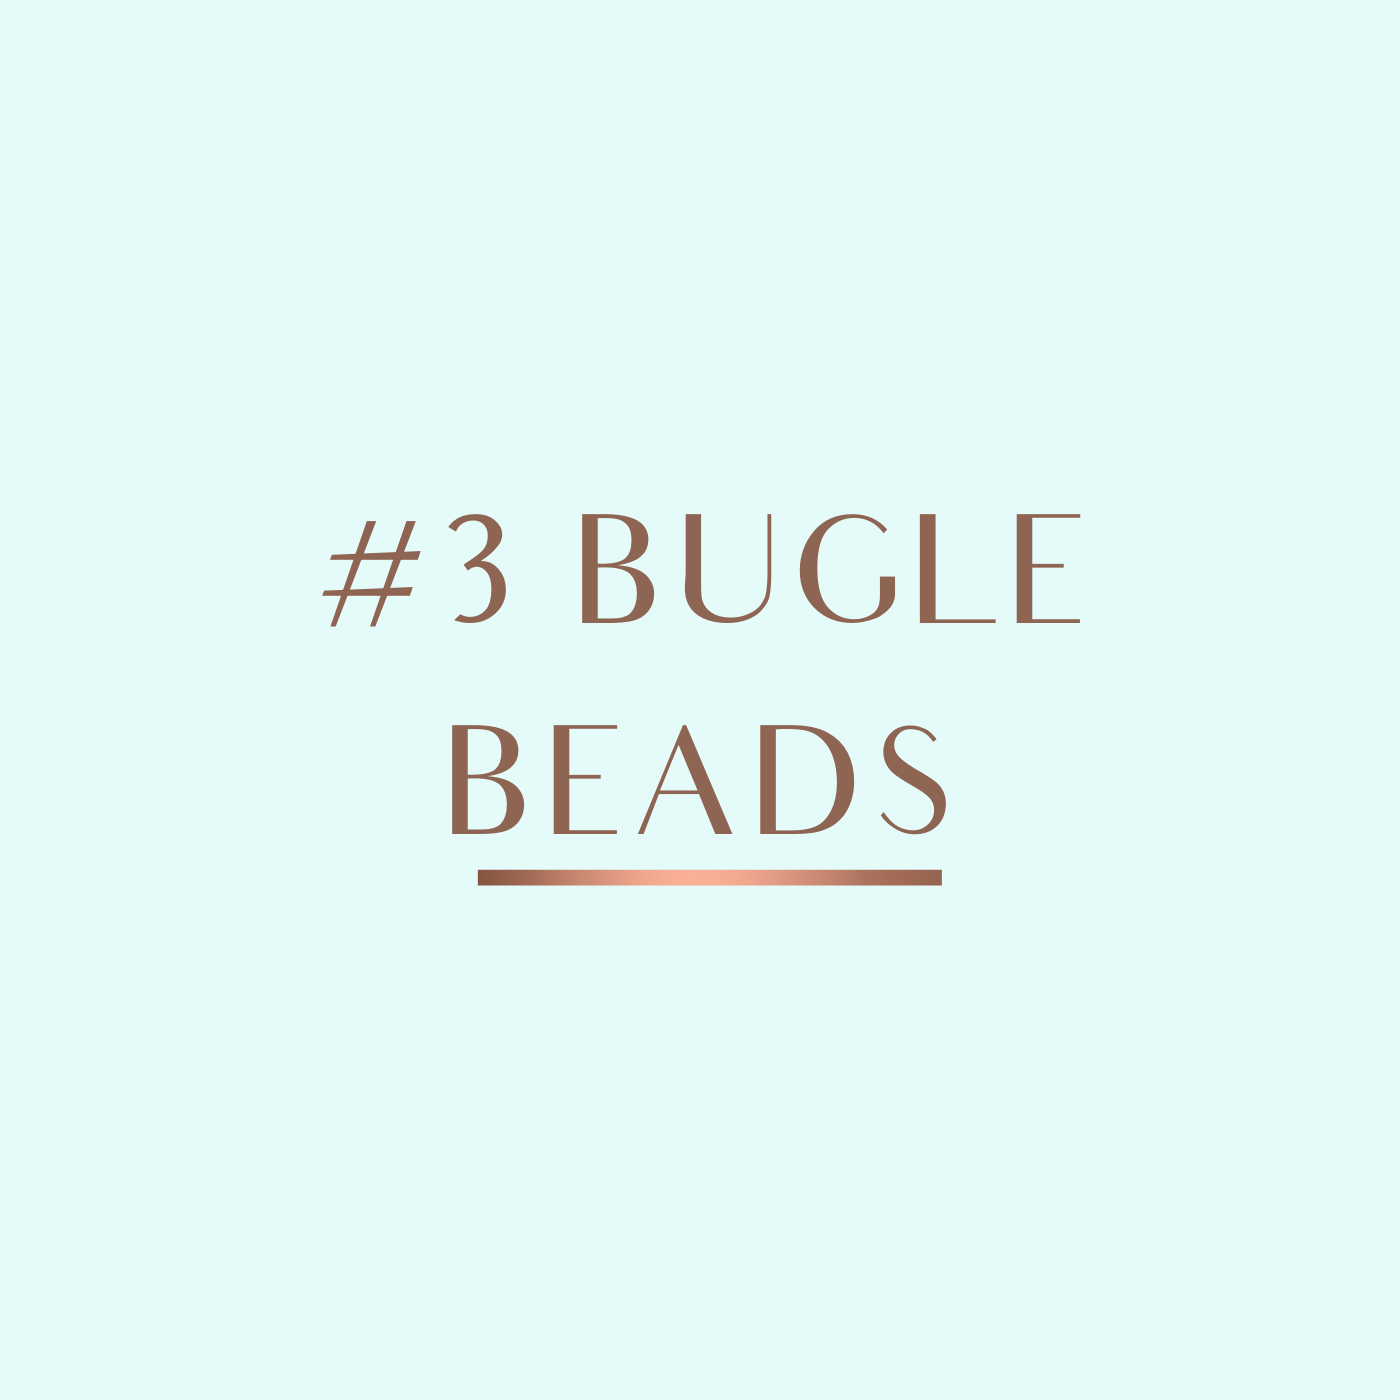 #3 BUGLE BEADS